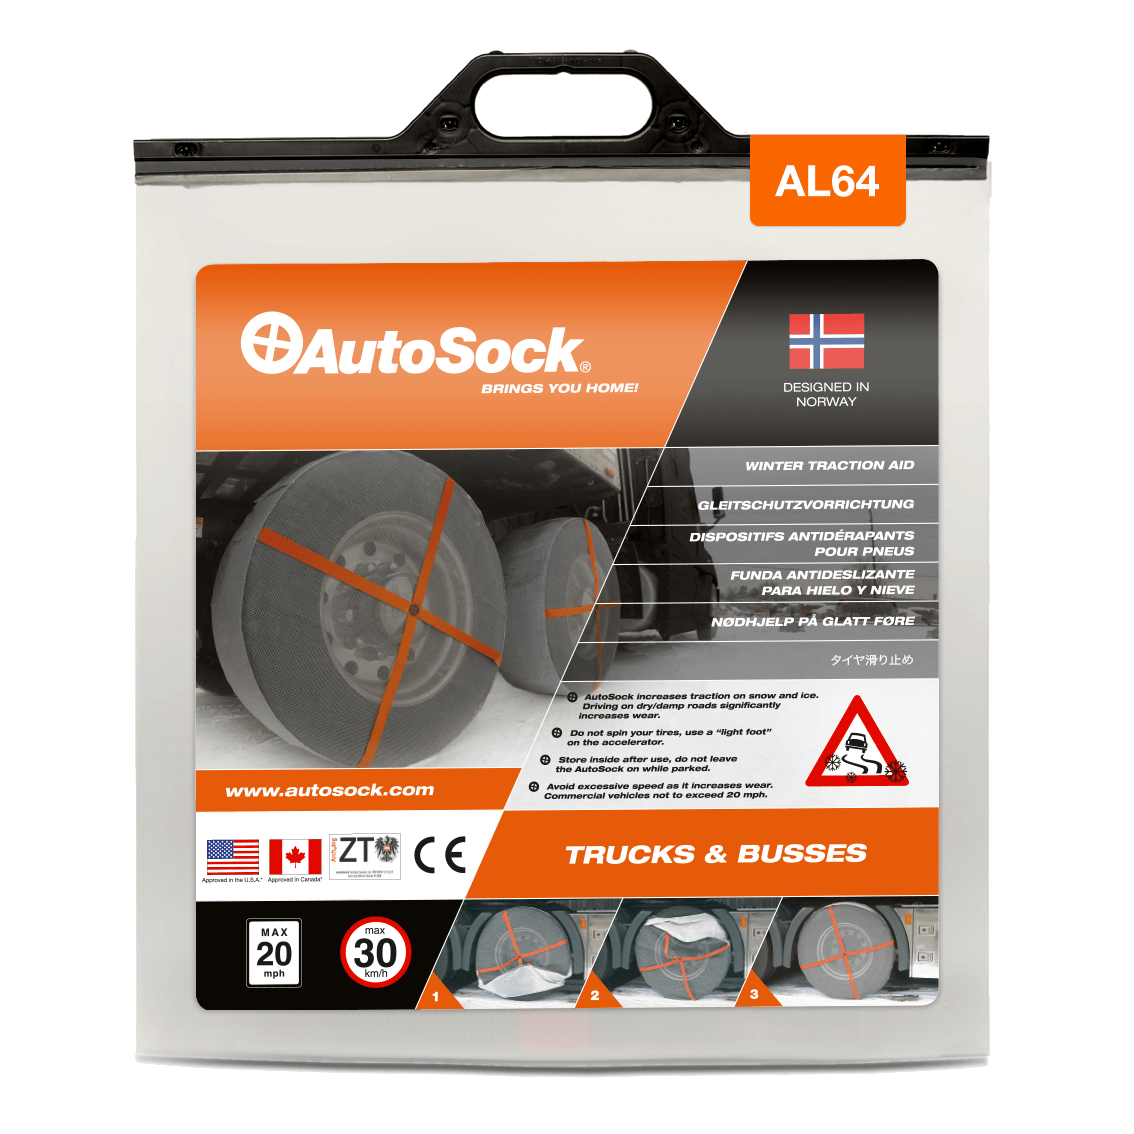 Embalaje del producto AutoSock AL 64 AL64 para camiones (vista frontal)